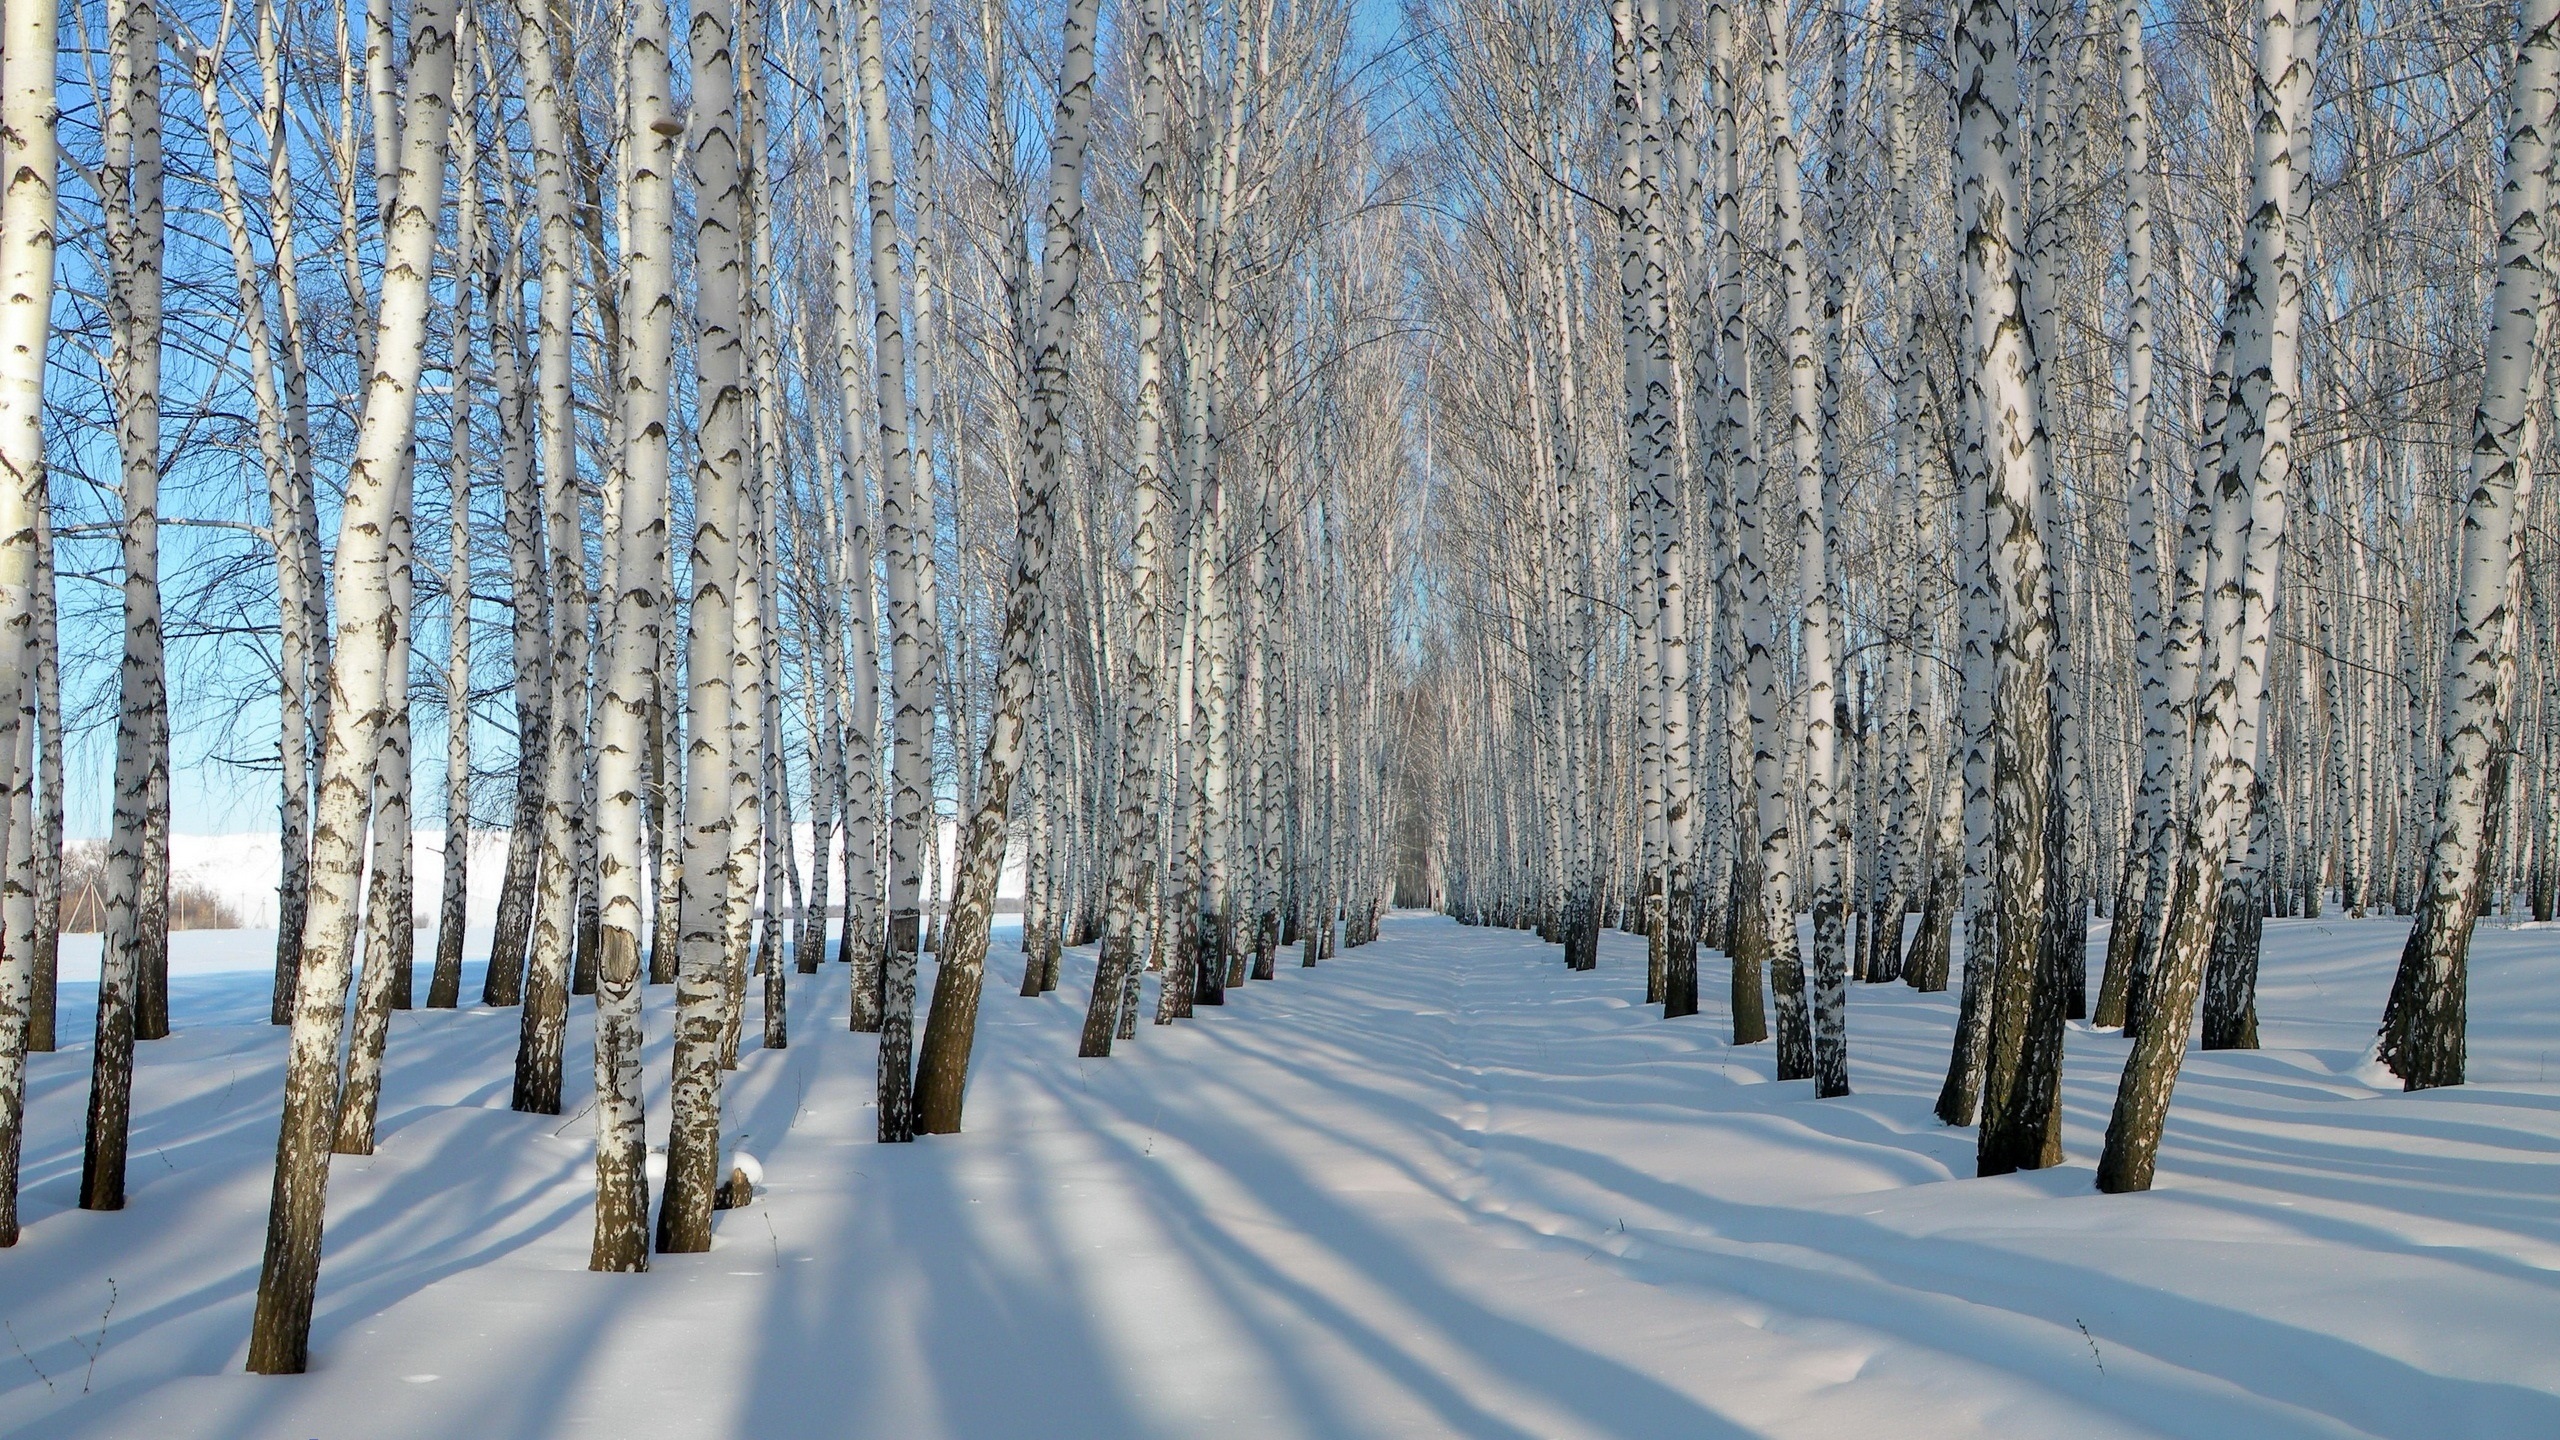 General 2560x1440 winter snow trees nature sky birch